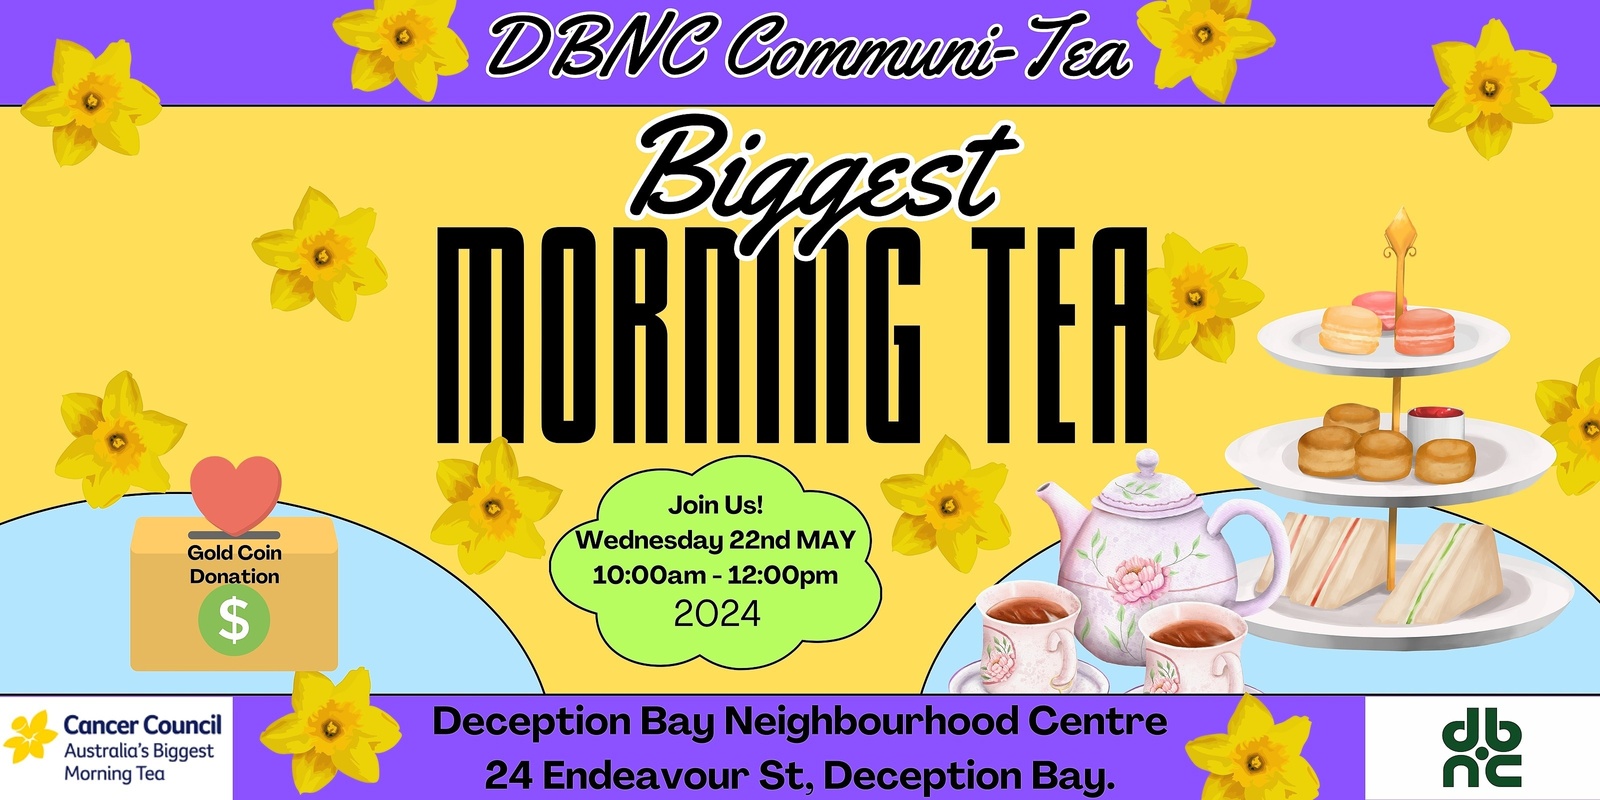 Banner image for DBNC Communi-Tea: Australia's Biggest Morning Tea